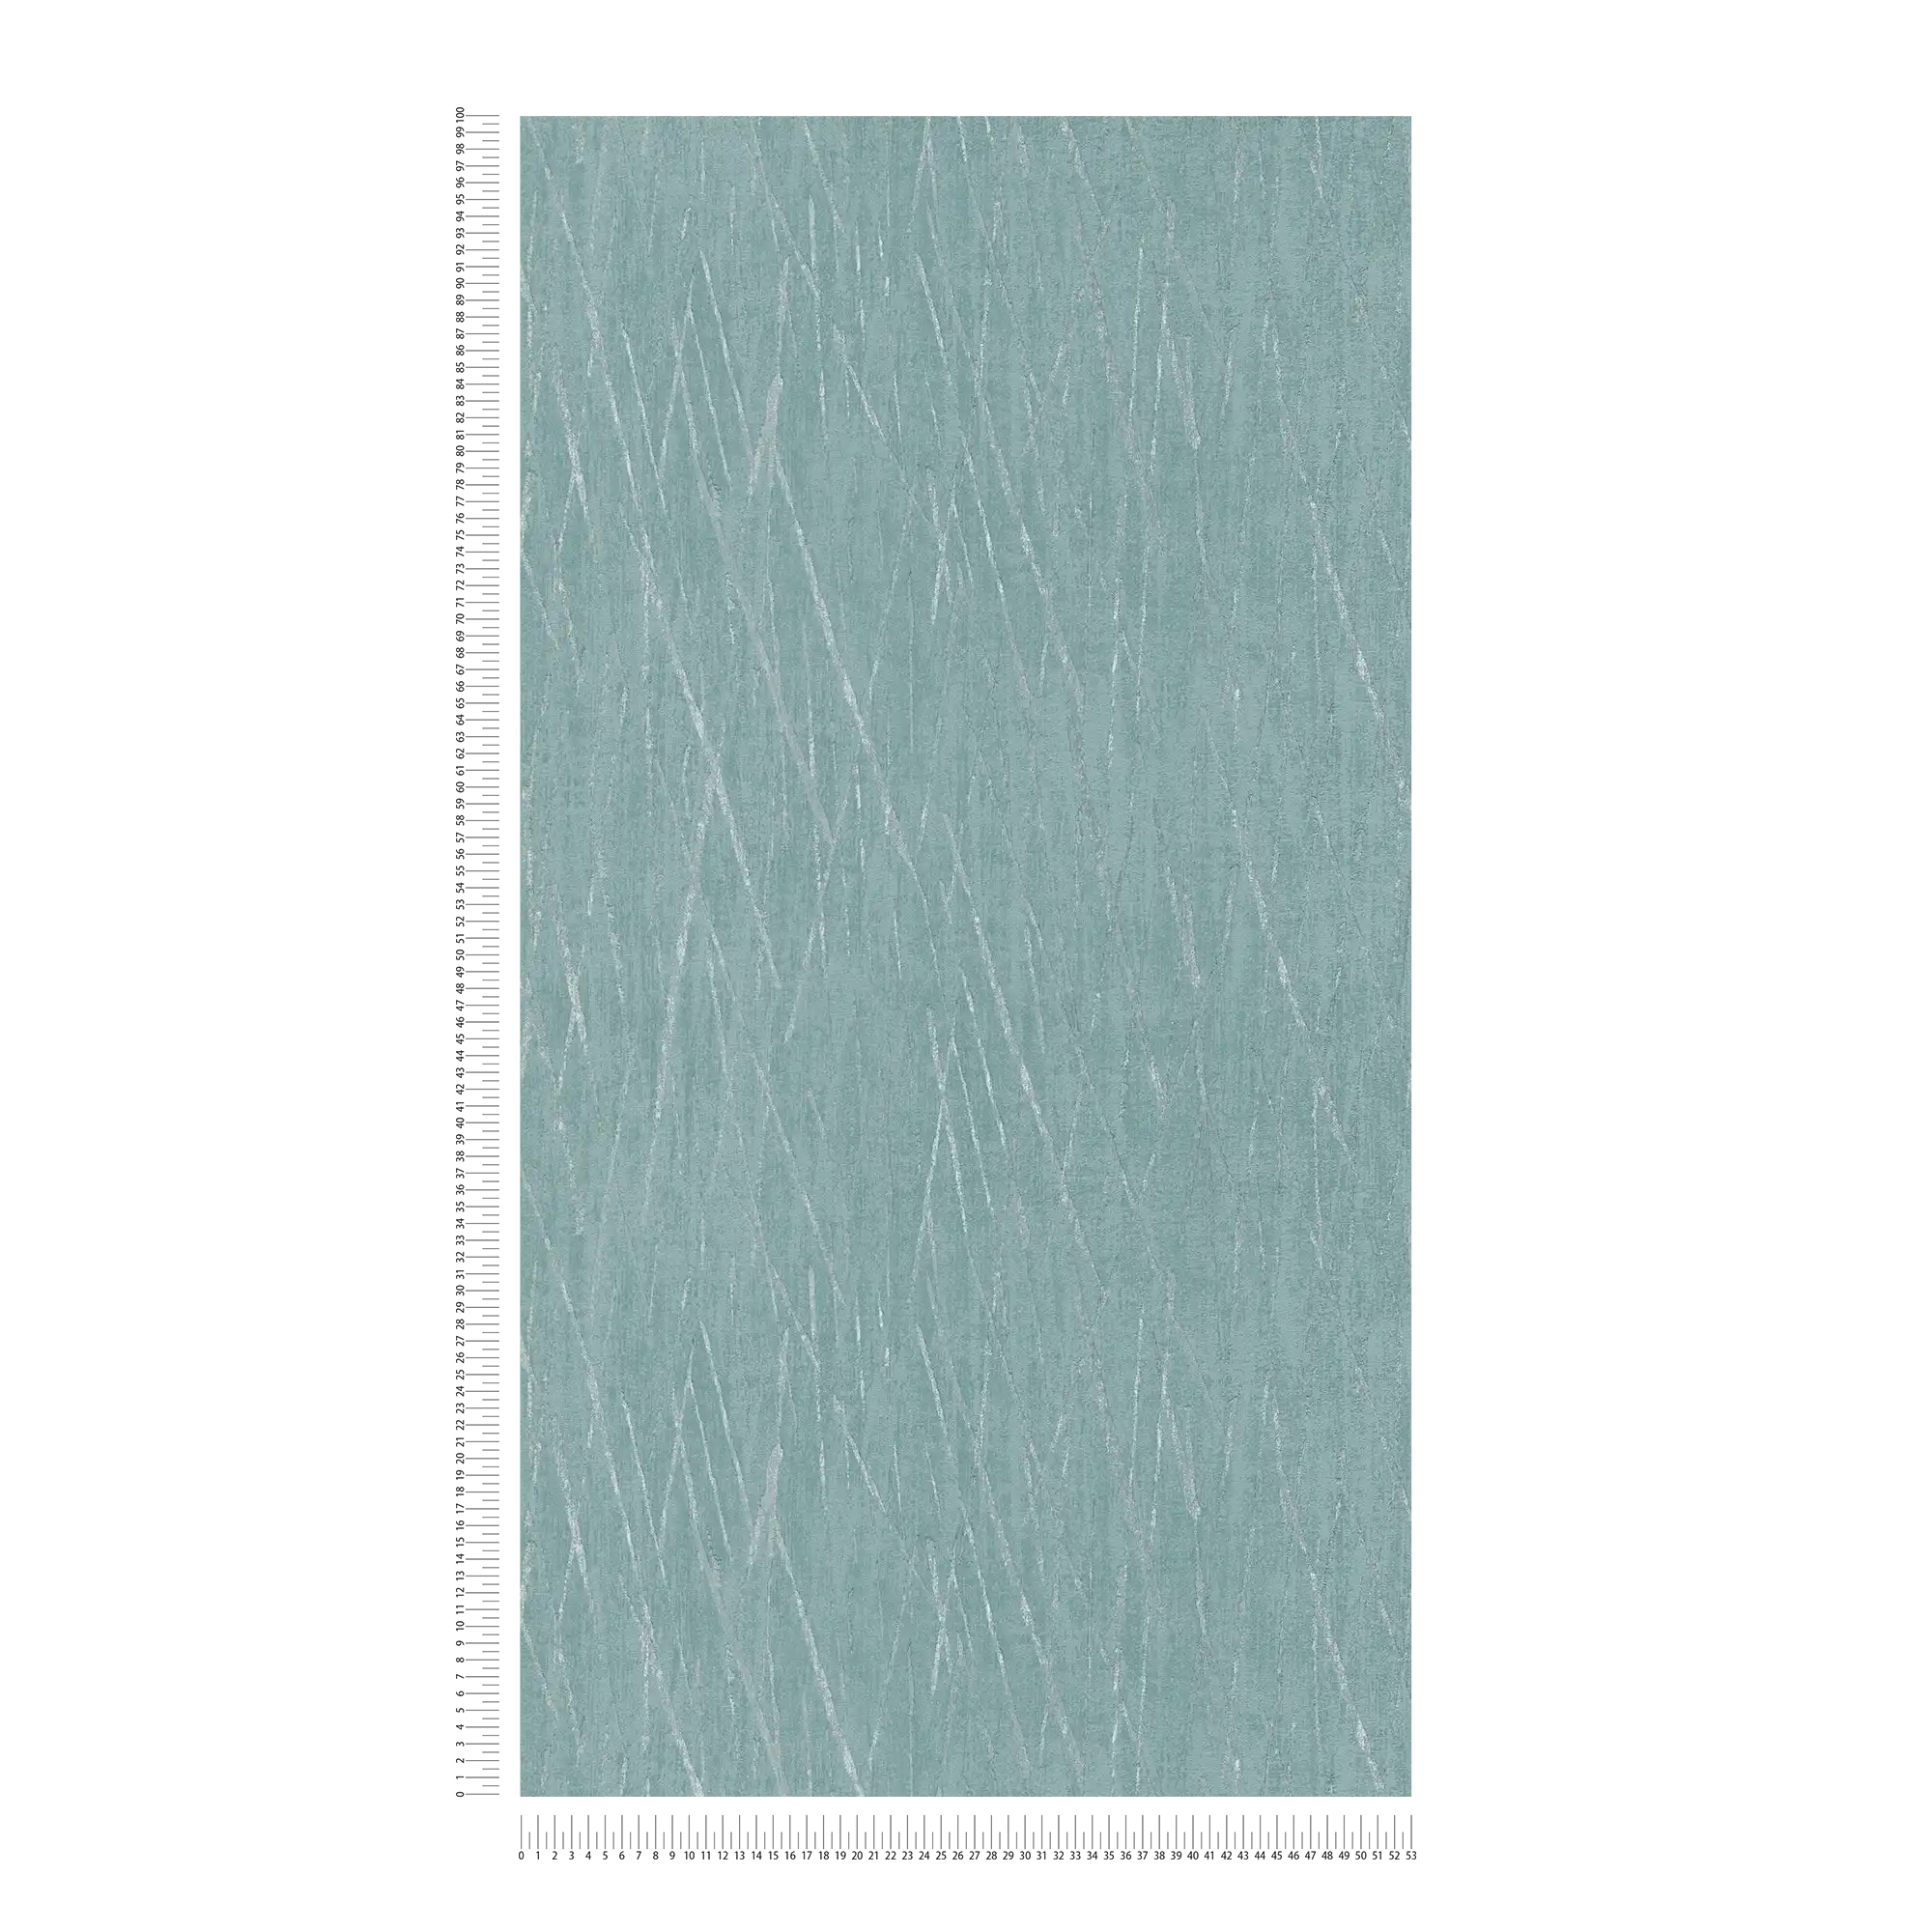             Carta da parati testurizzata con colori metallici - blu, verde, argento
        